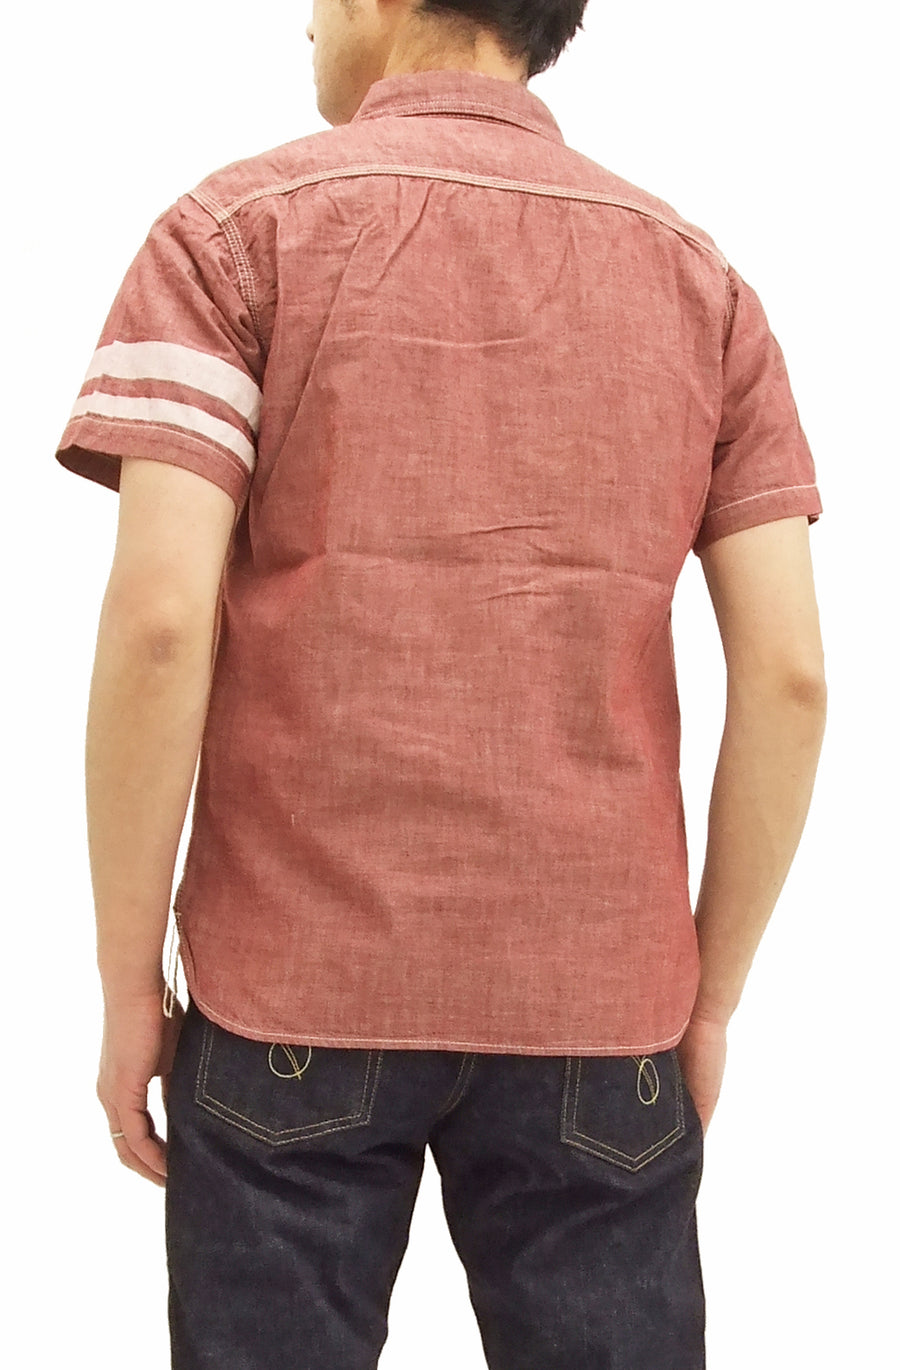 Momotaro Jeans Men's Chambray Shirt Short Sleeve Work Shirt with GTB Stripe SJ092 Red